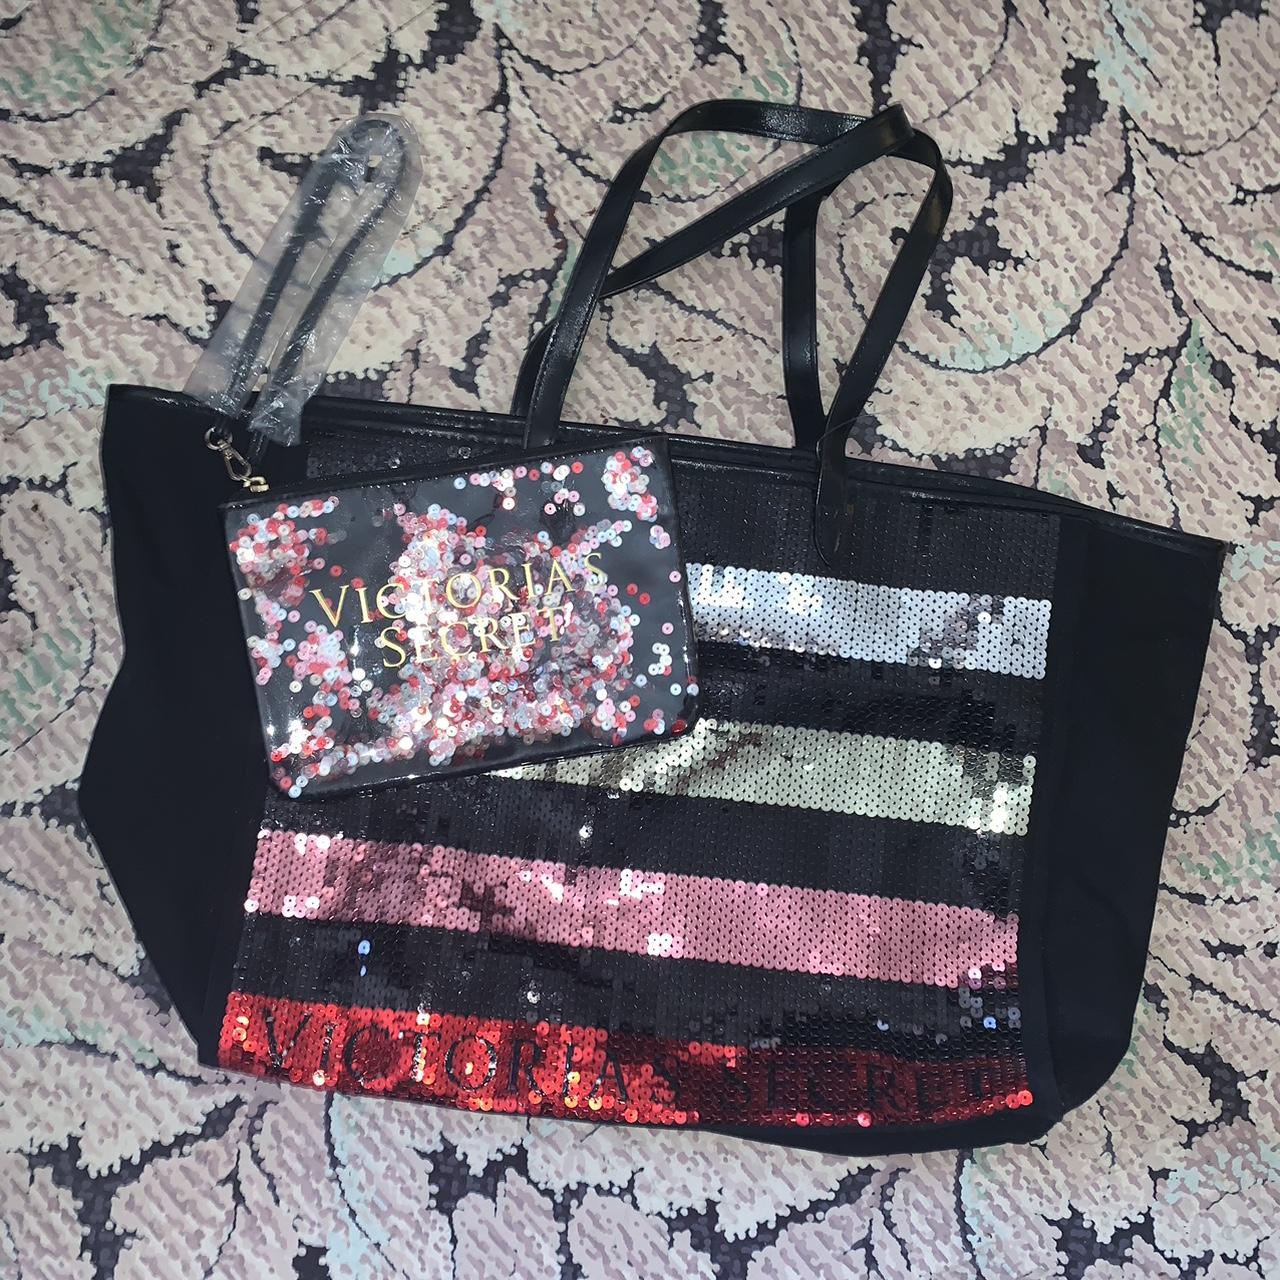 Victoria secret makeup case glitter bag - Depop